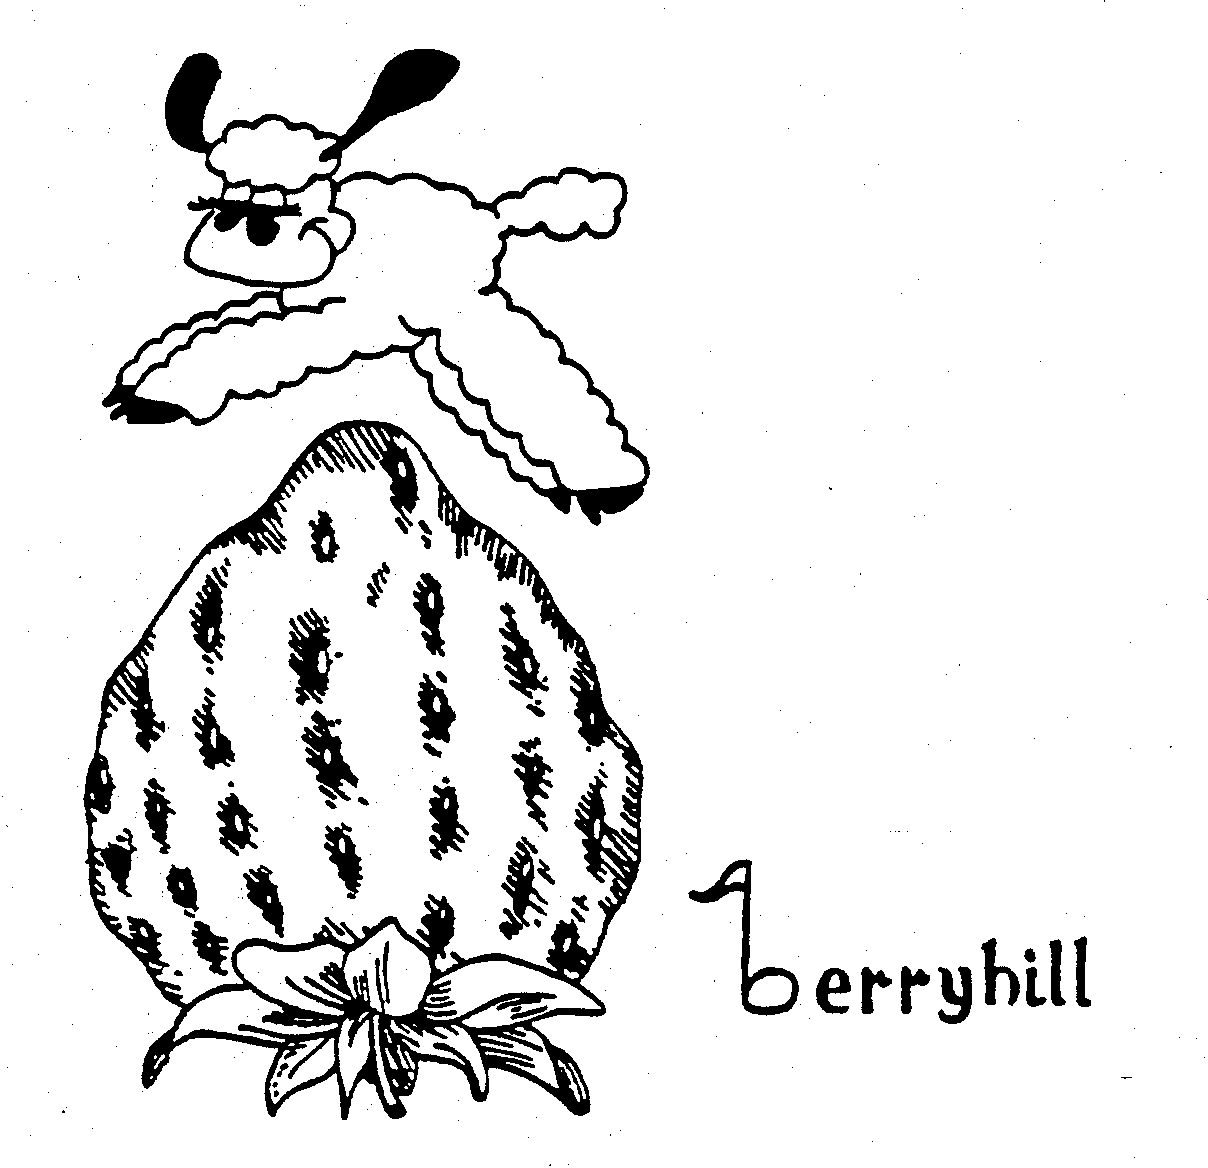 BERRYHILL